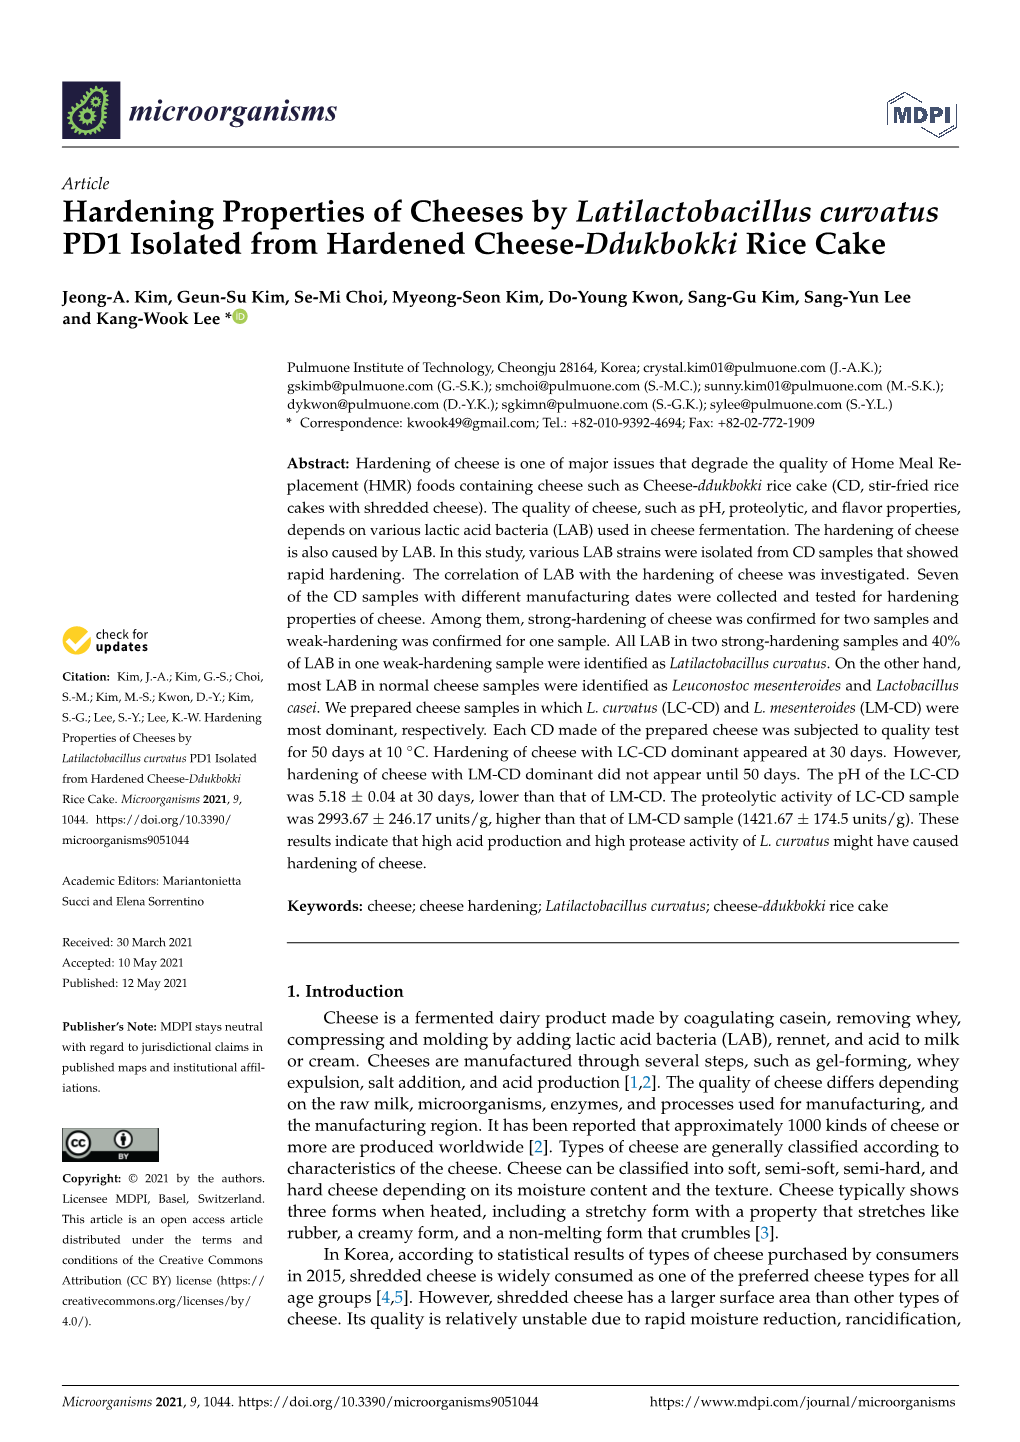 Hardening Properties of Cheeses by Latilactobacillus Curvatus PD1 Isolated from Hardened Cheese-Ddukbokki Rice Cake